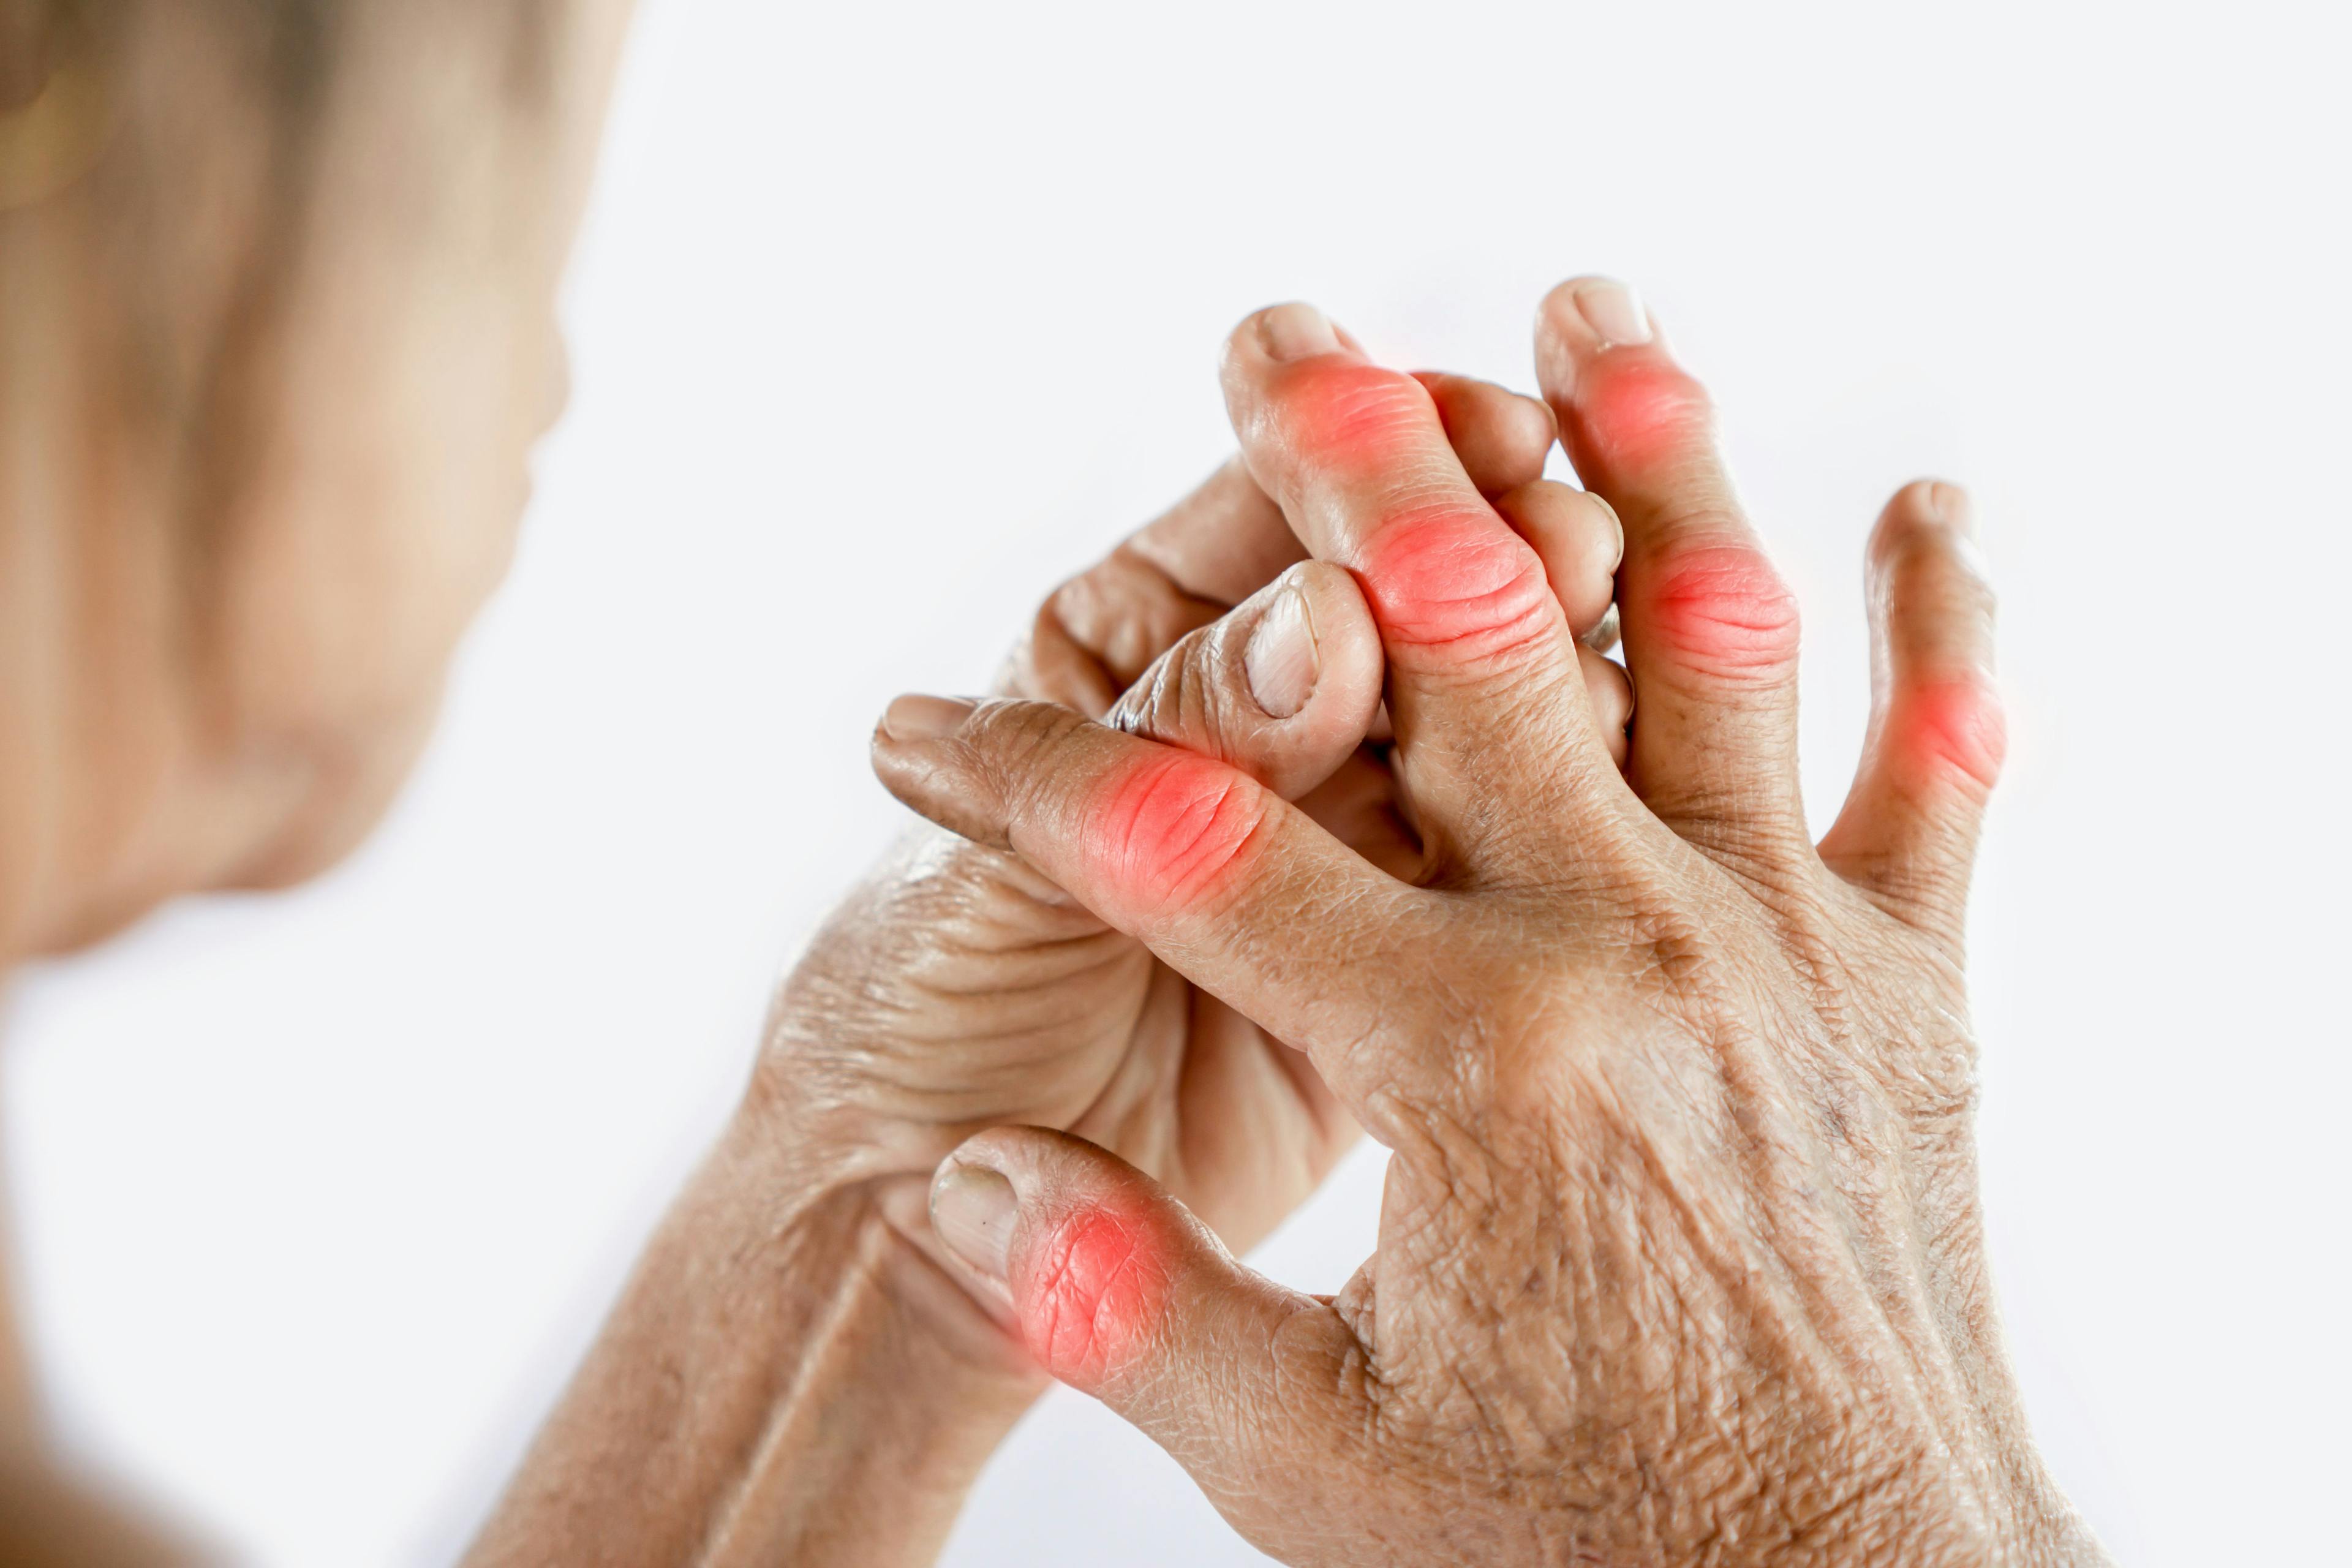 Woman Enduring Rheumatoid Arthritis | image credit: doucefleur - stock.adobe.com